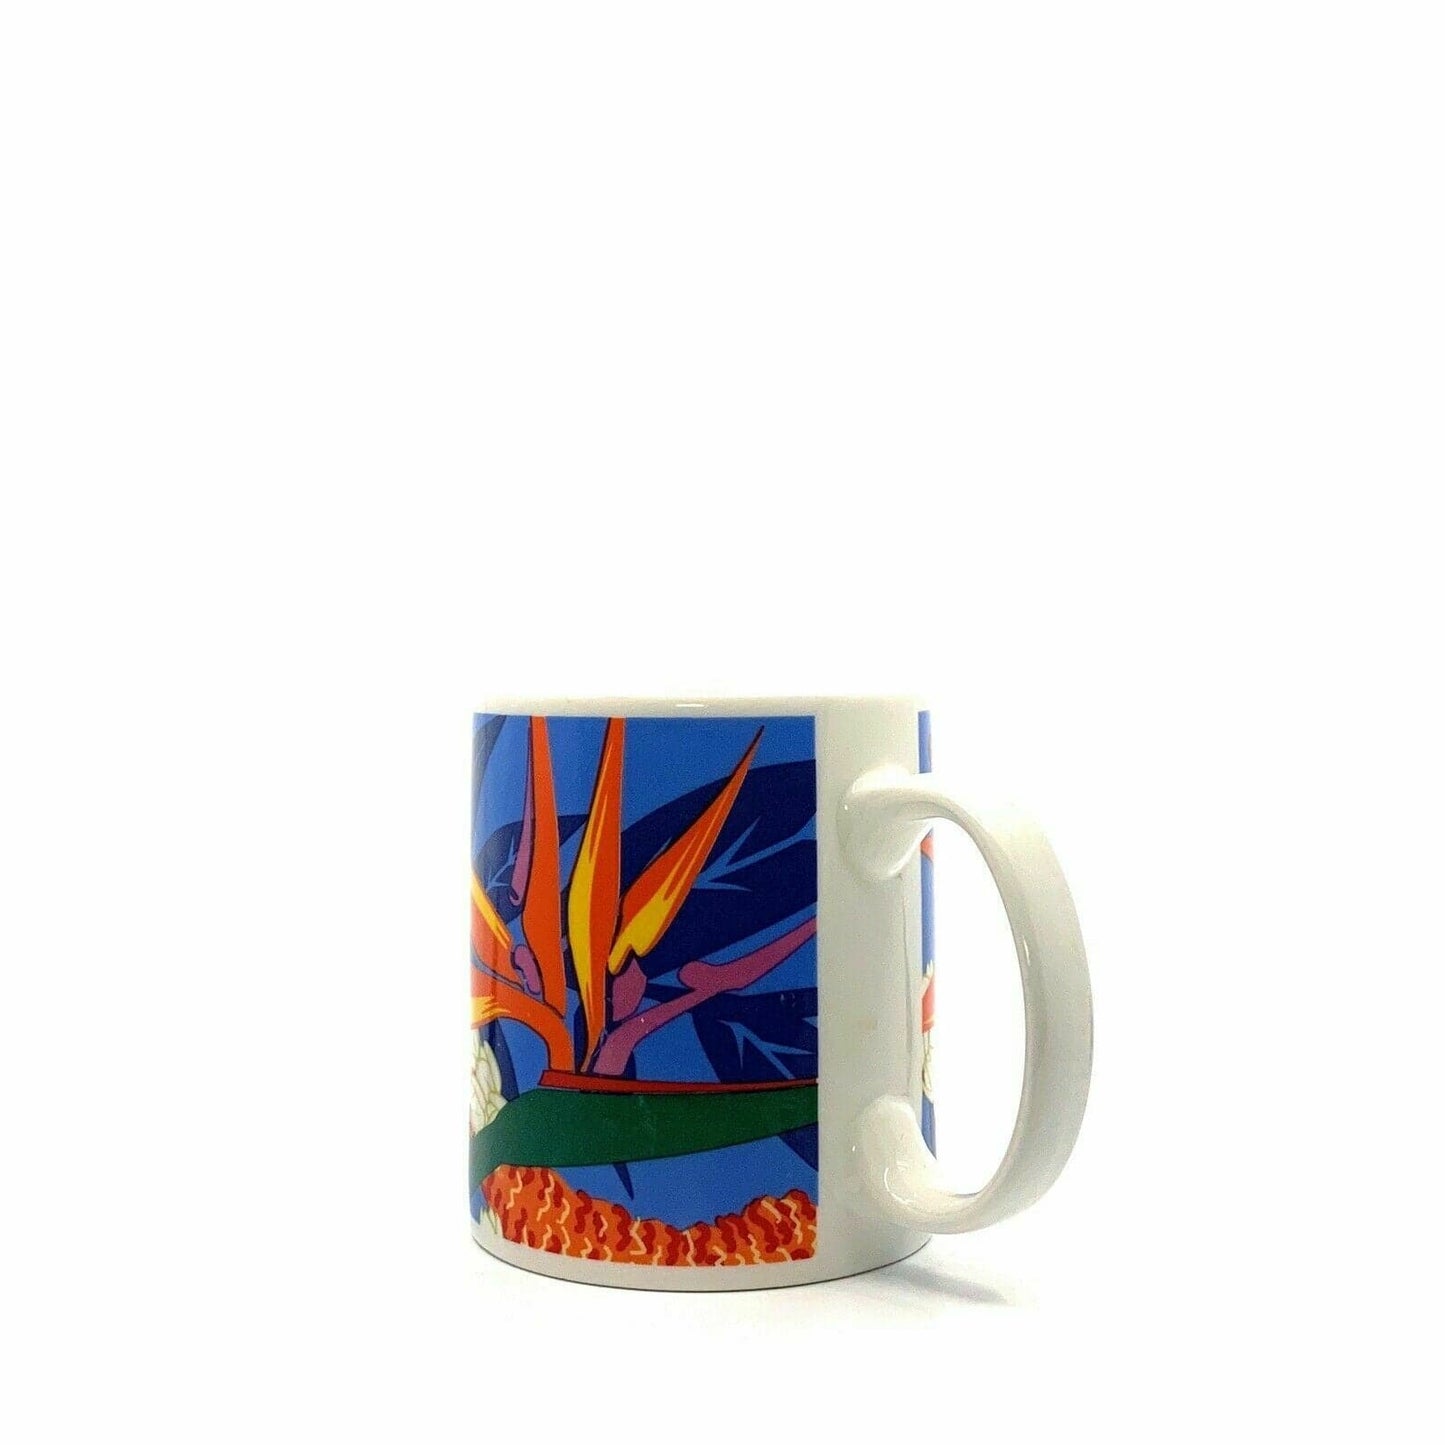 Hilo Hattie The Store Of Hawaii Coffee Tea Mug Cup Island Heritage 1999 - 10oz